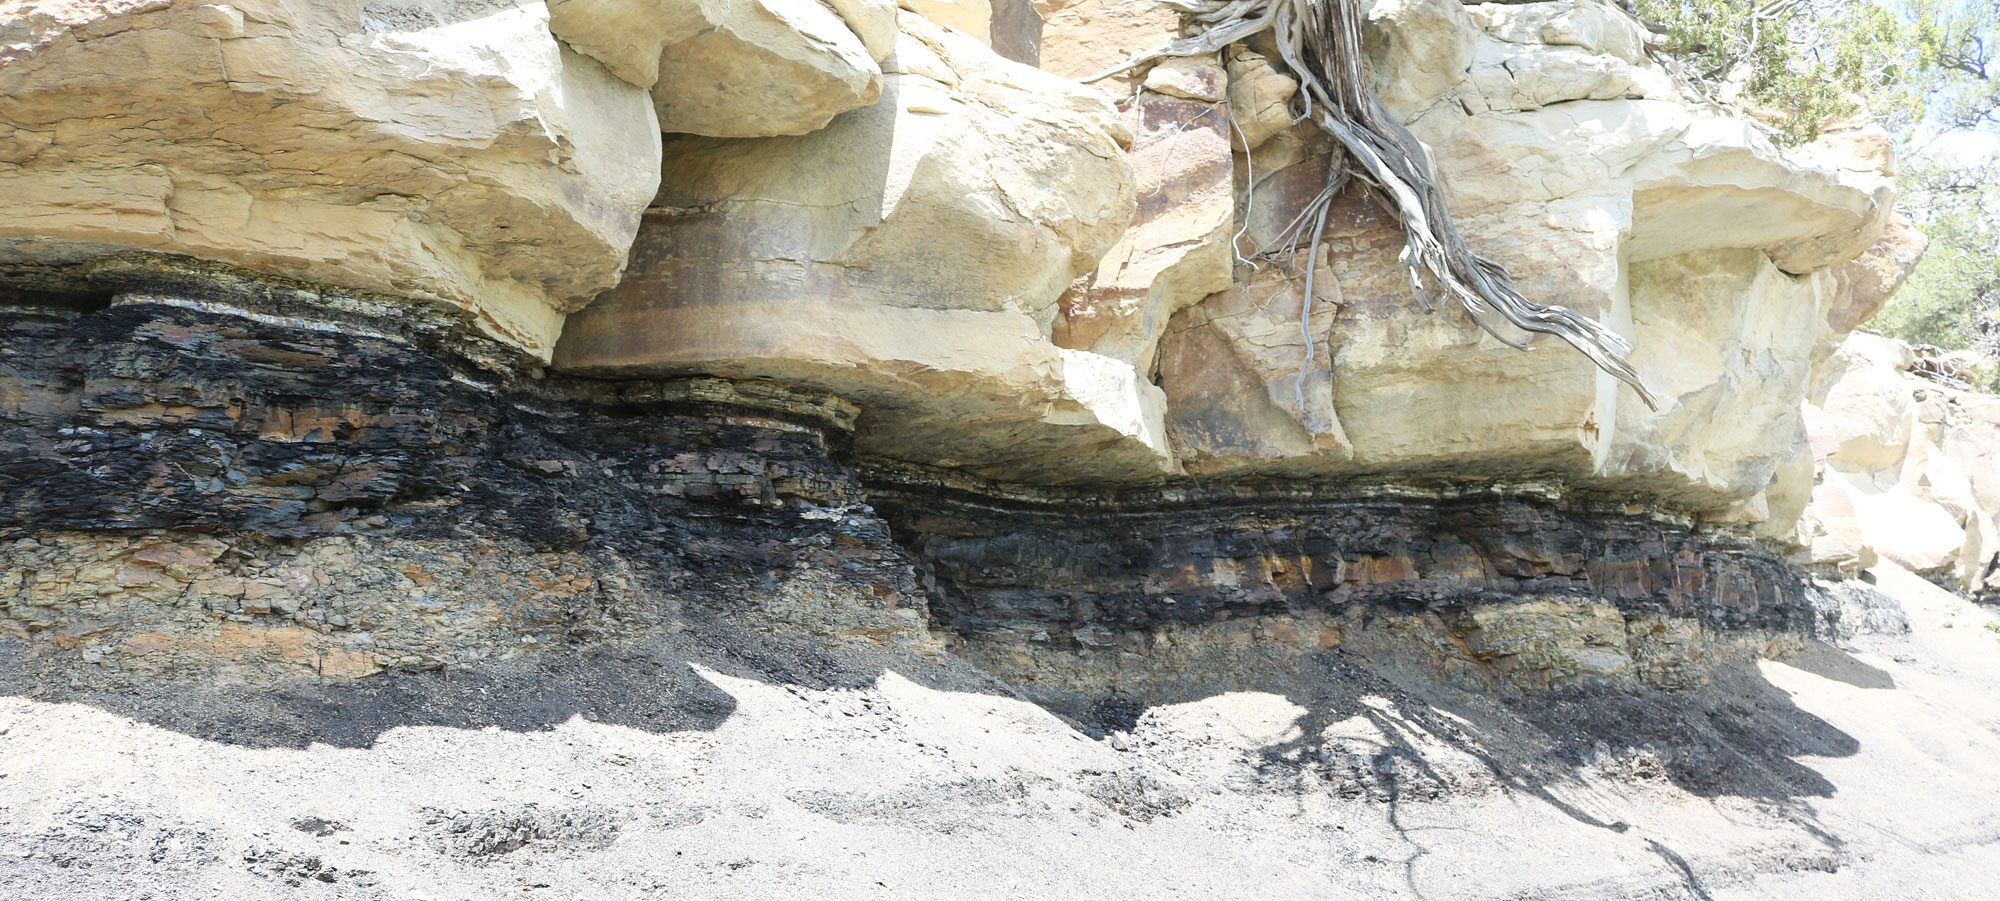 Photograph of the Cretaceous-Paleogene boundary near Trinidad, Colorado. The boundary shows a thick, dark-colored later beneath a tan-colored outcrop.